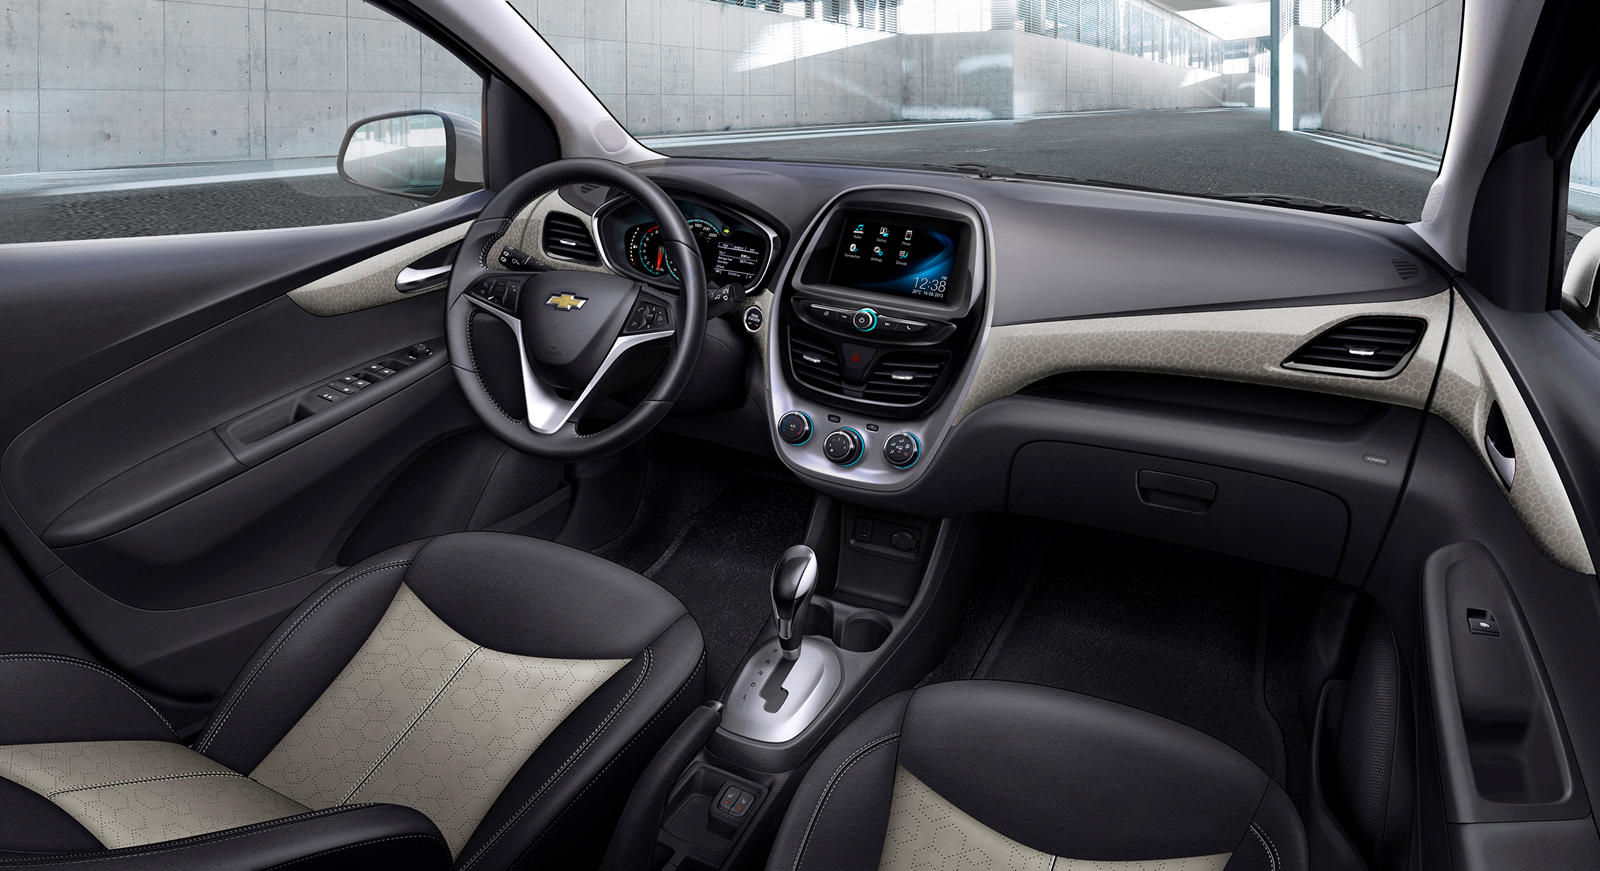 2022 Chevrolet Spark Dashboard